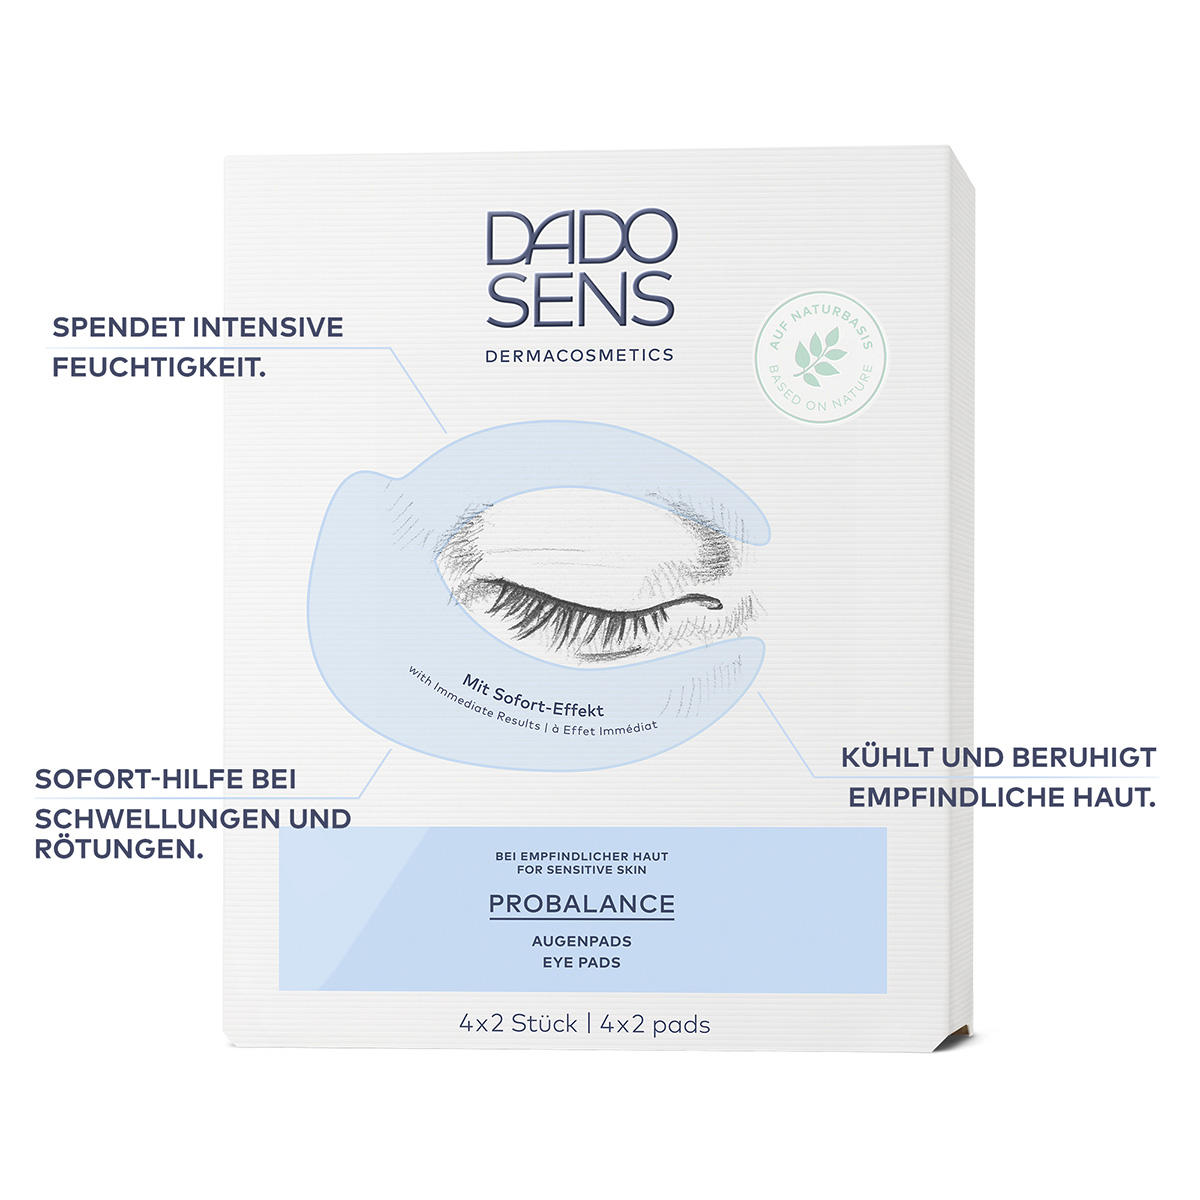 DADO SENS Eye pads 2 Packung mit 4 x Stück - 4